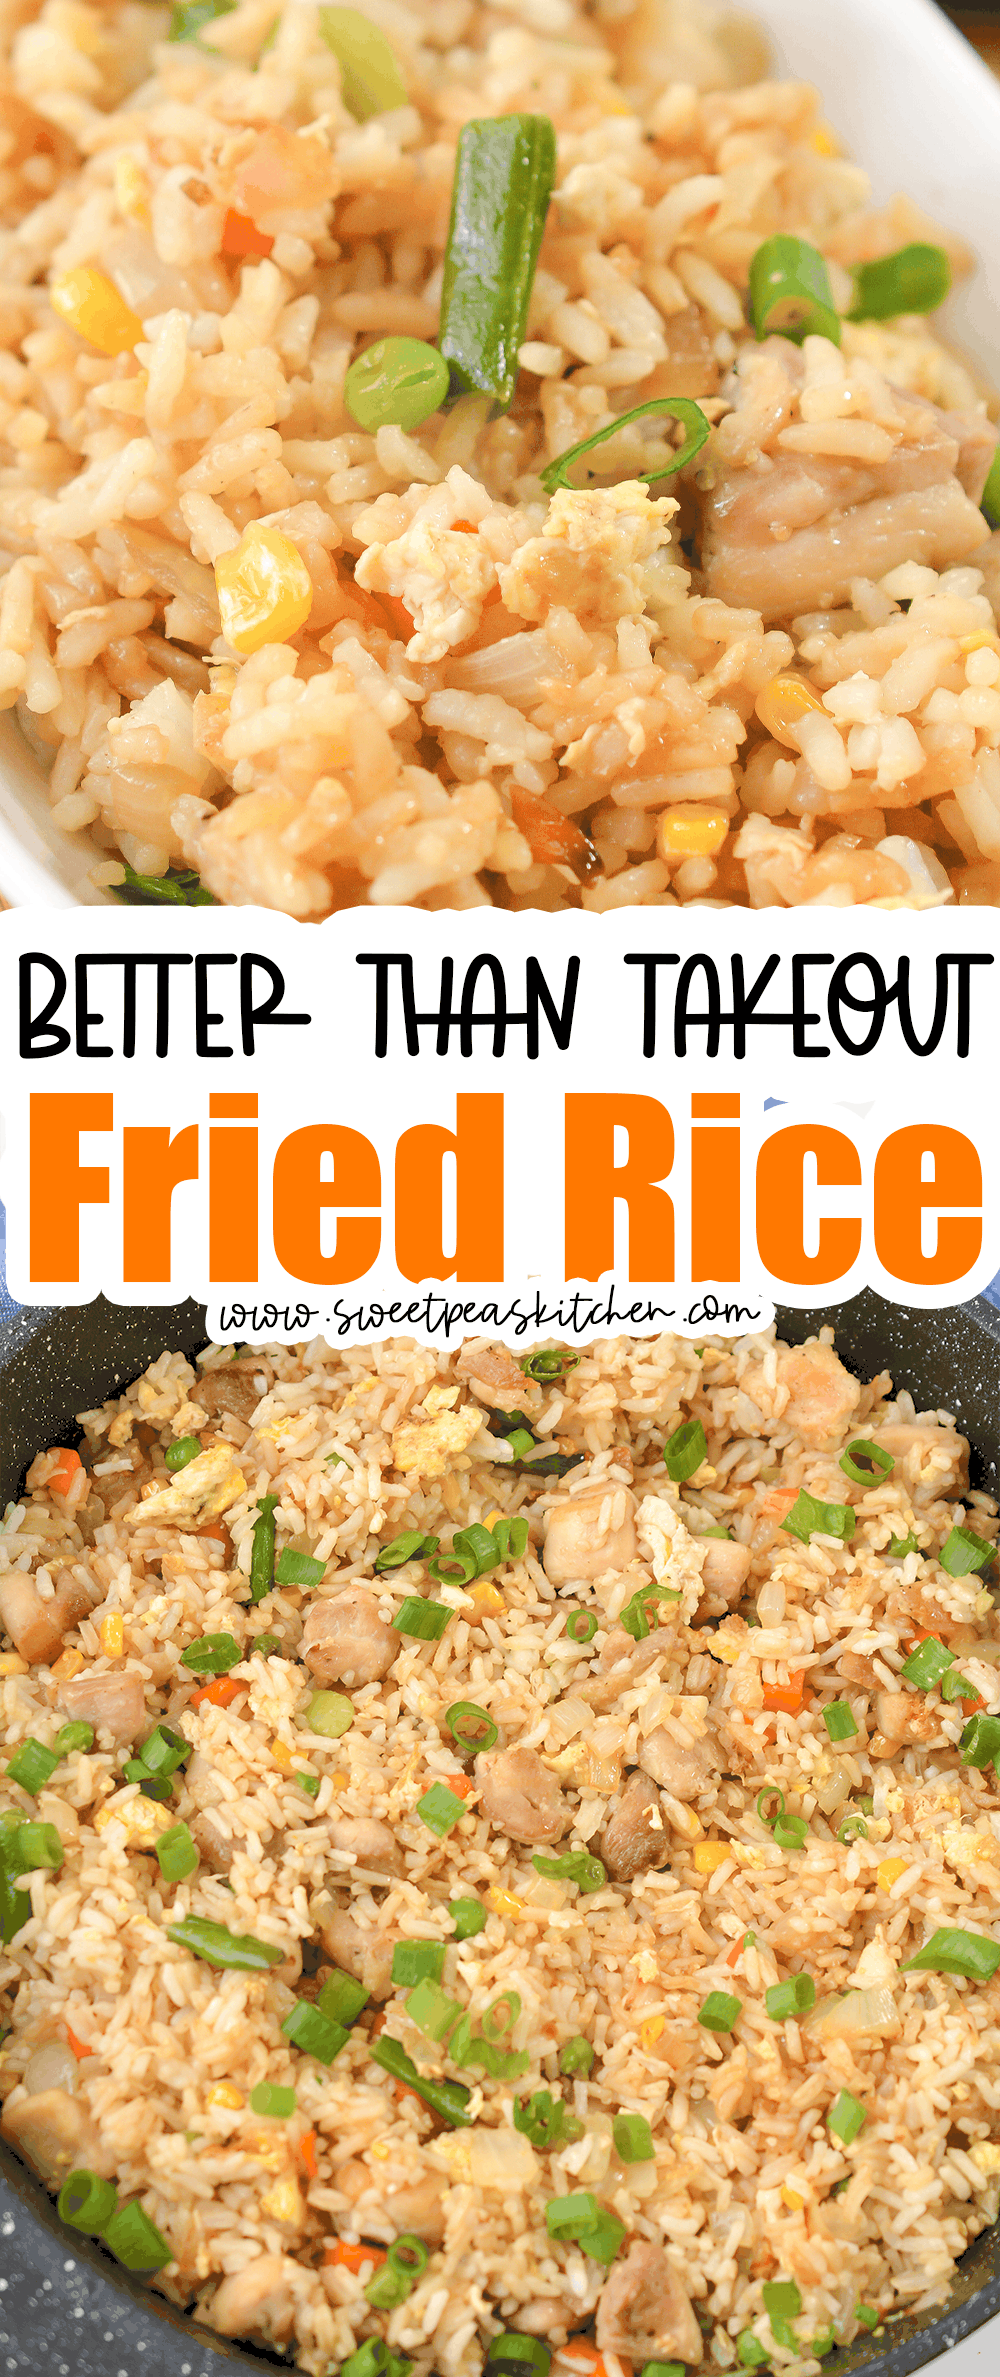 Better Than Takeout Fried Rice | LaptrinhX / News